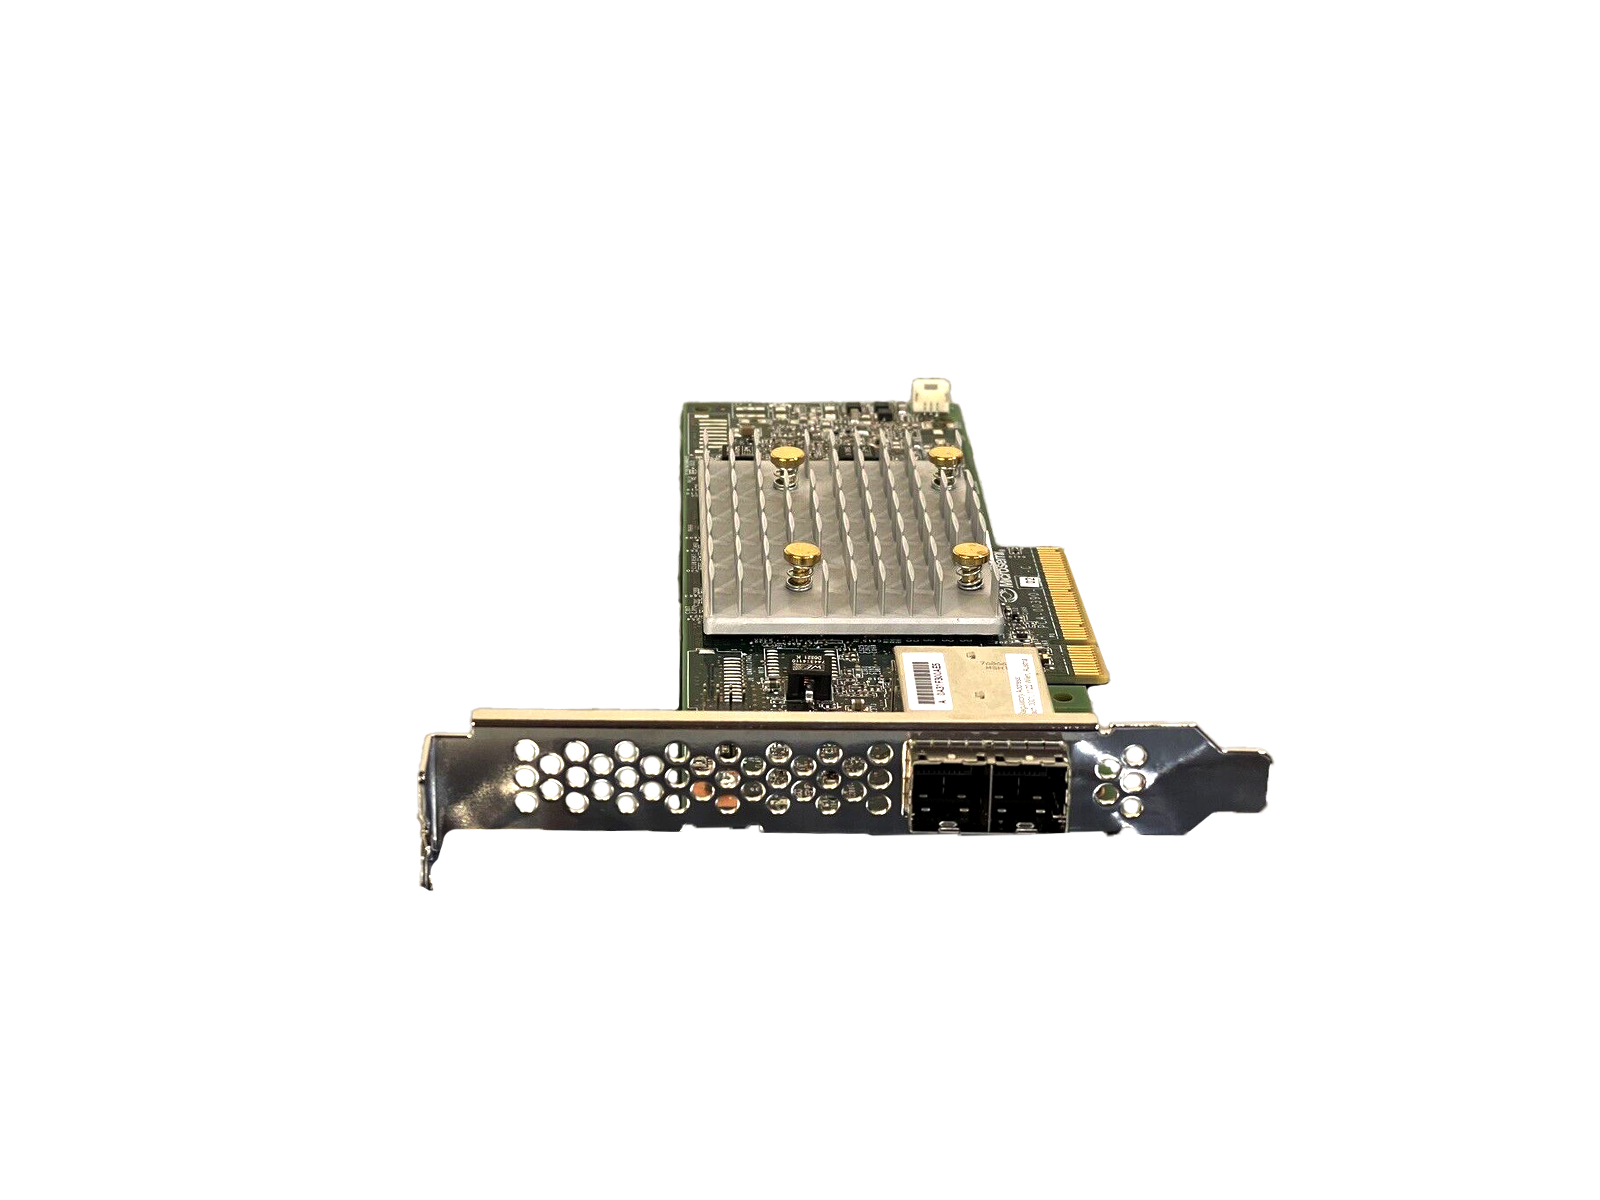 HPE 804405-B21 Smart Array P408e-p SR External 12G/s Controller 4GB Cache PCI-e SATA SAS 836270-001 FBWC 12G 804407-001 877849-001 878645-001 HWHHW-9020 RAID HBA.